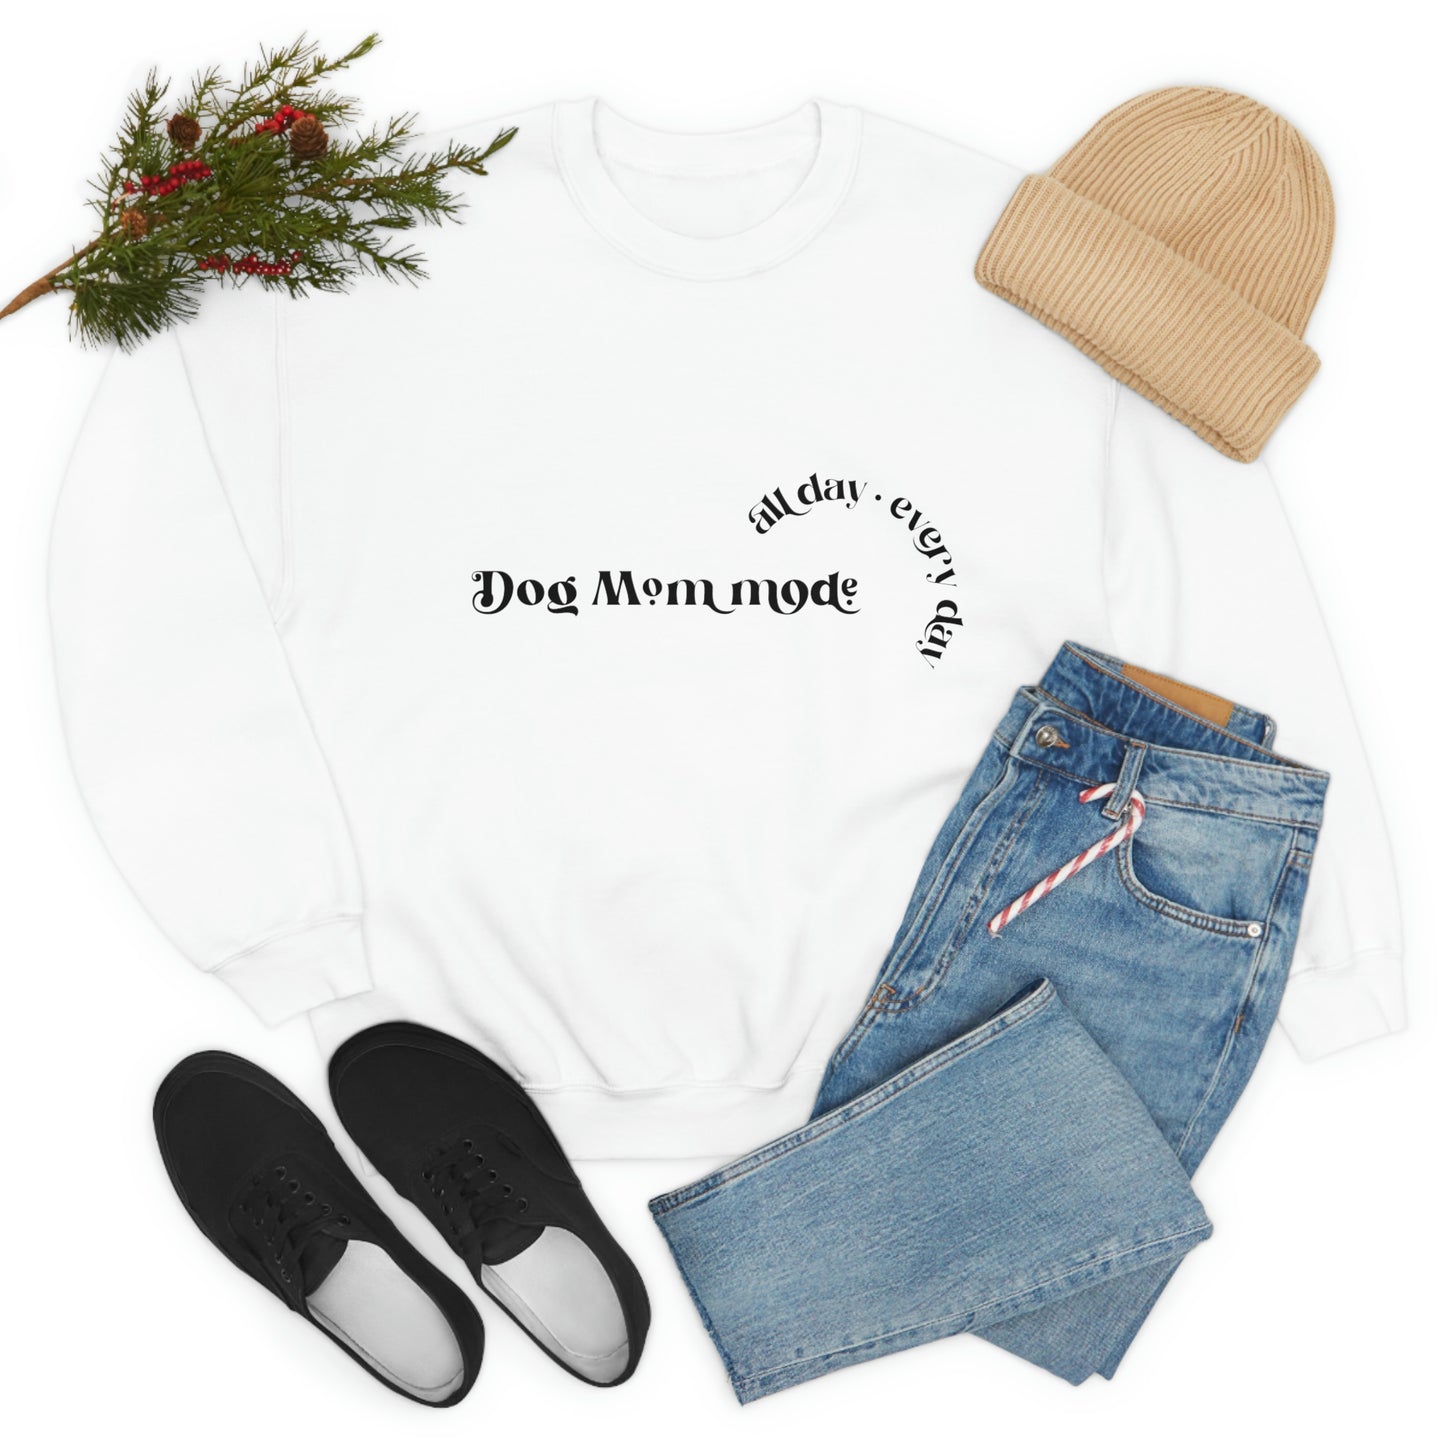 Dog Mom Mode All Day Everyday Crewneck Sweatshirt